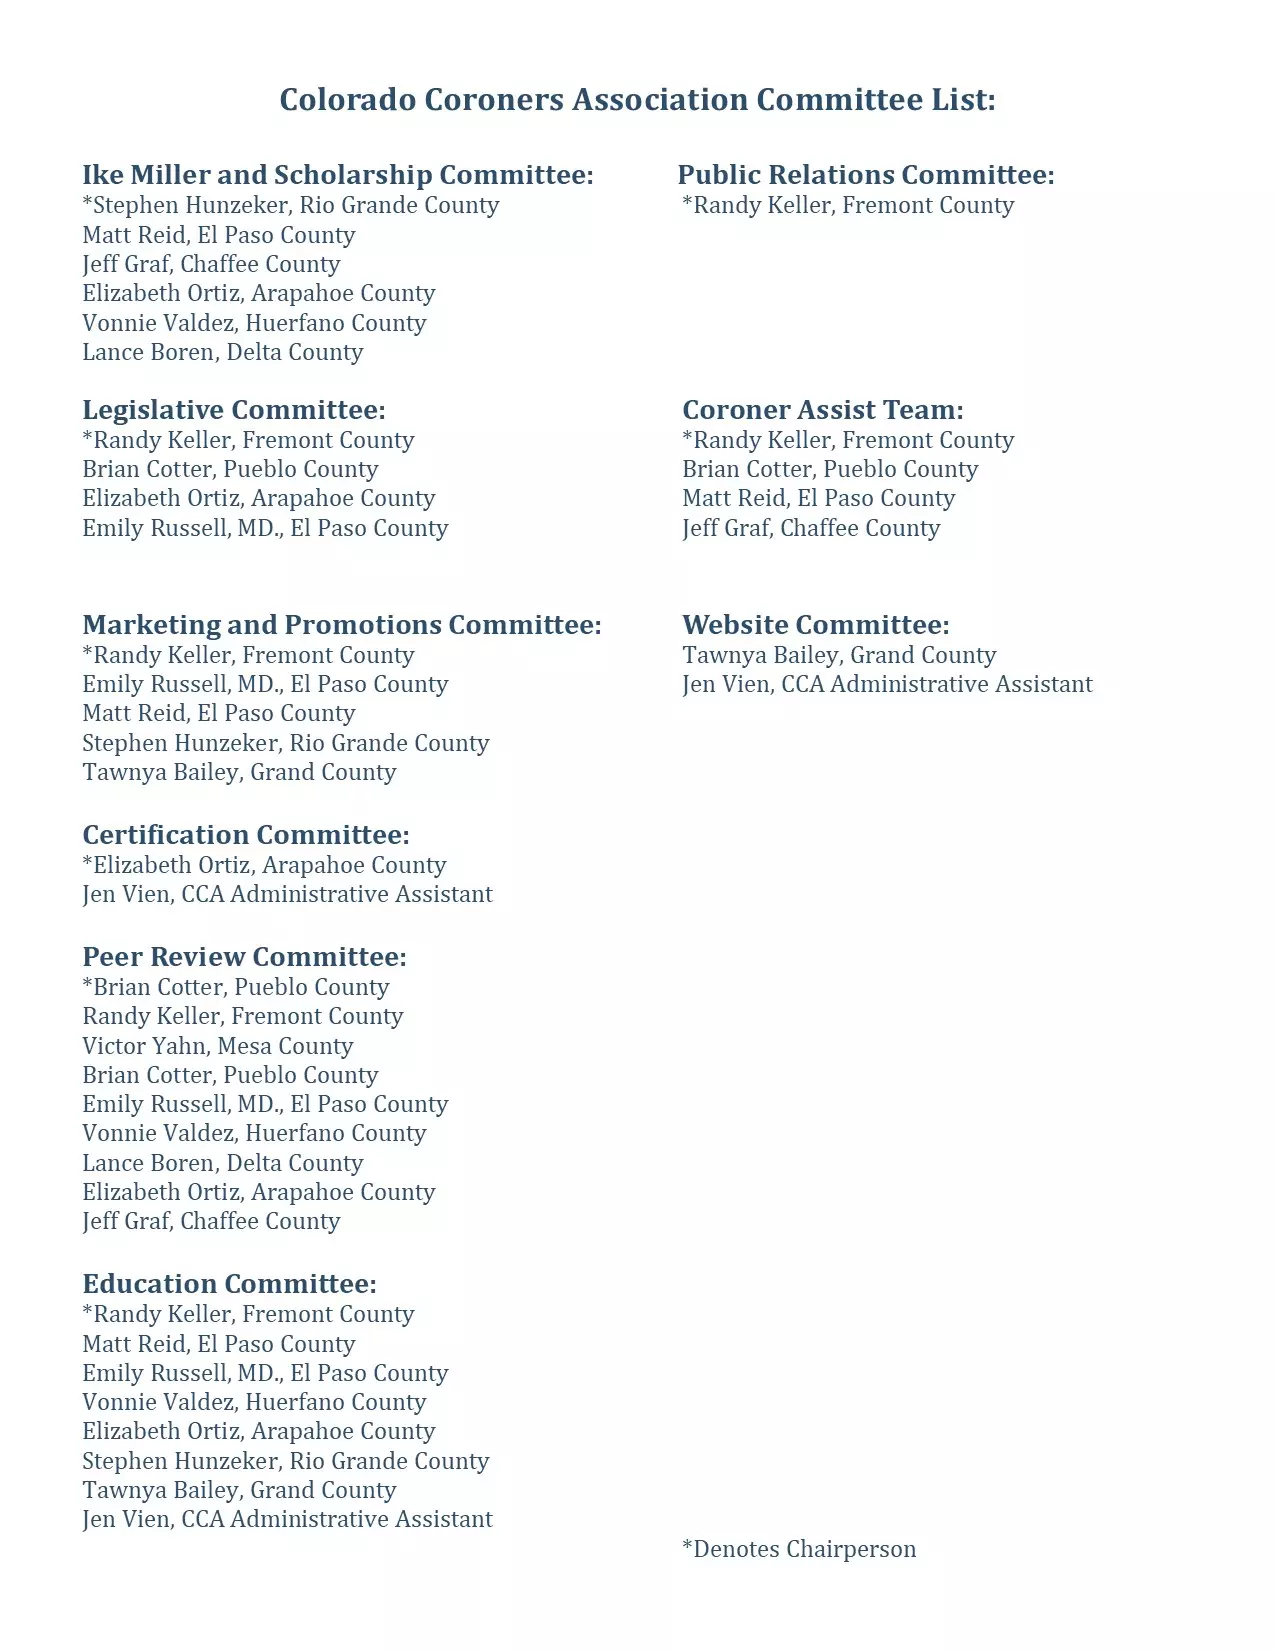 Colorado Coroners Association Committees